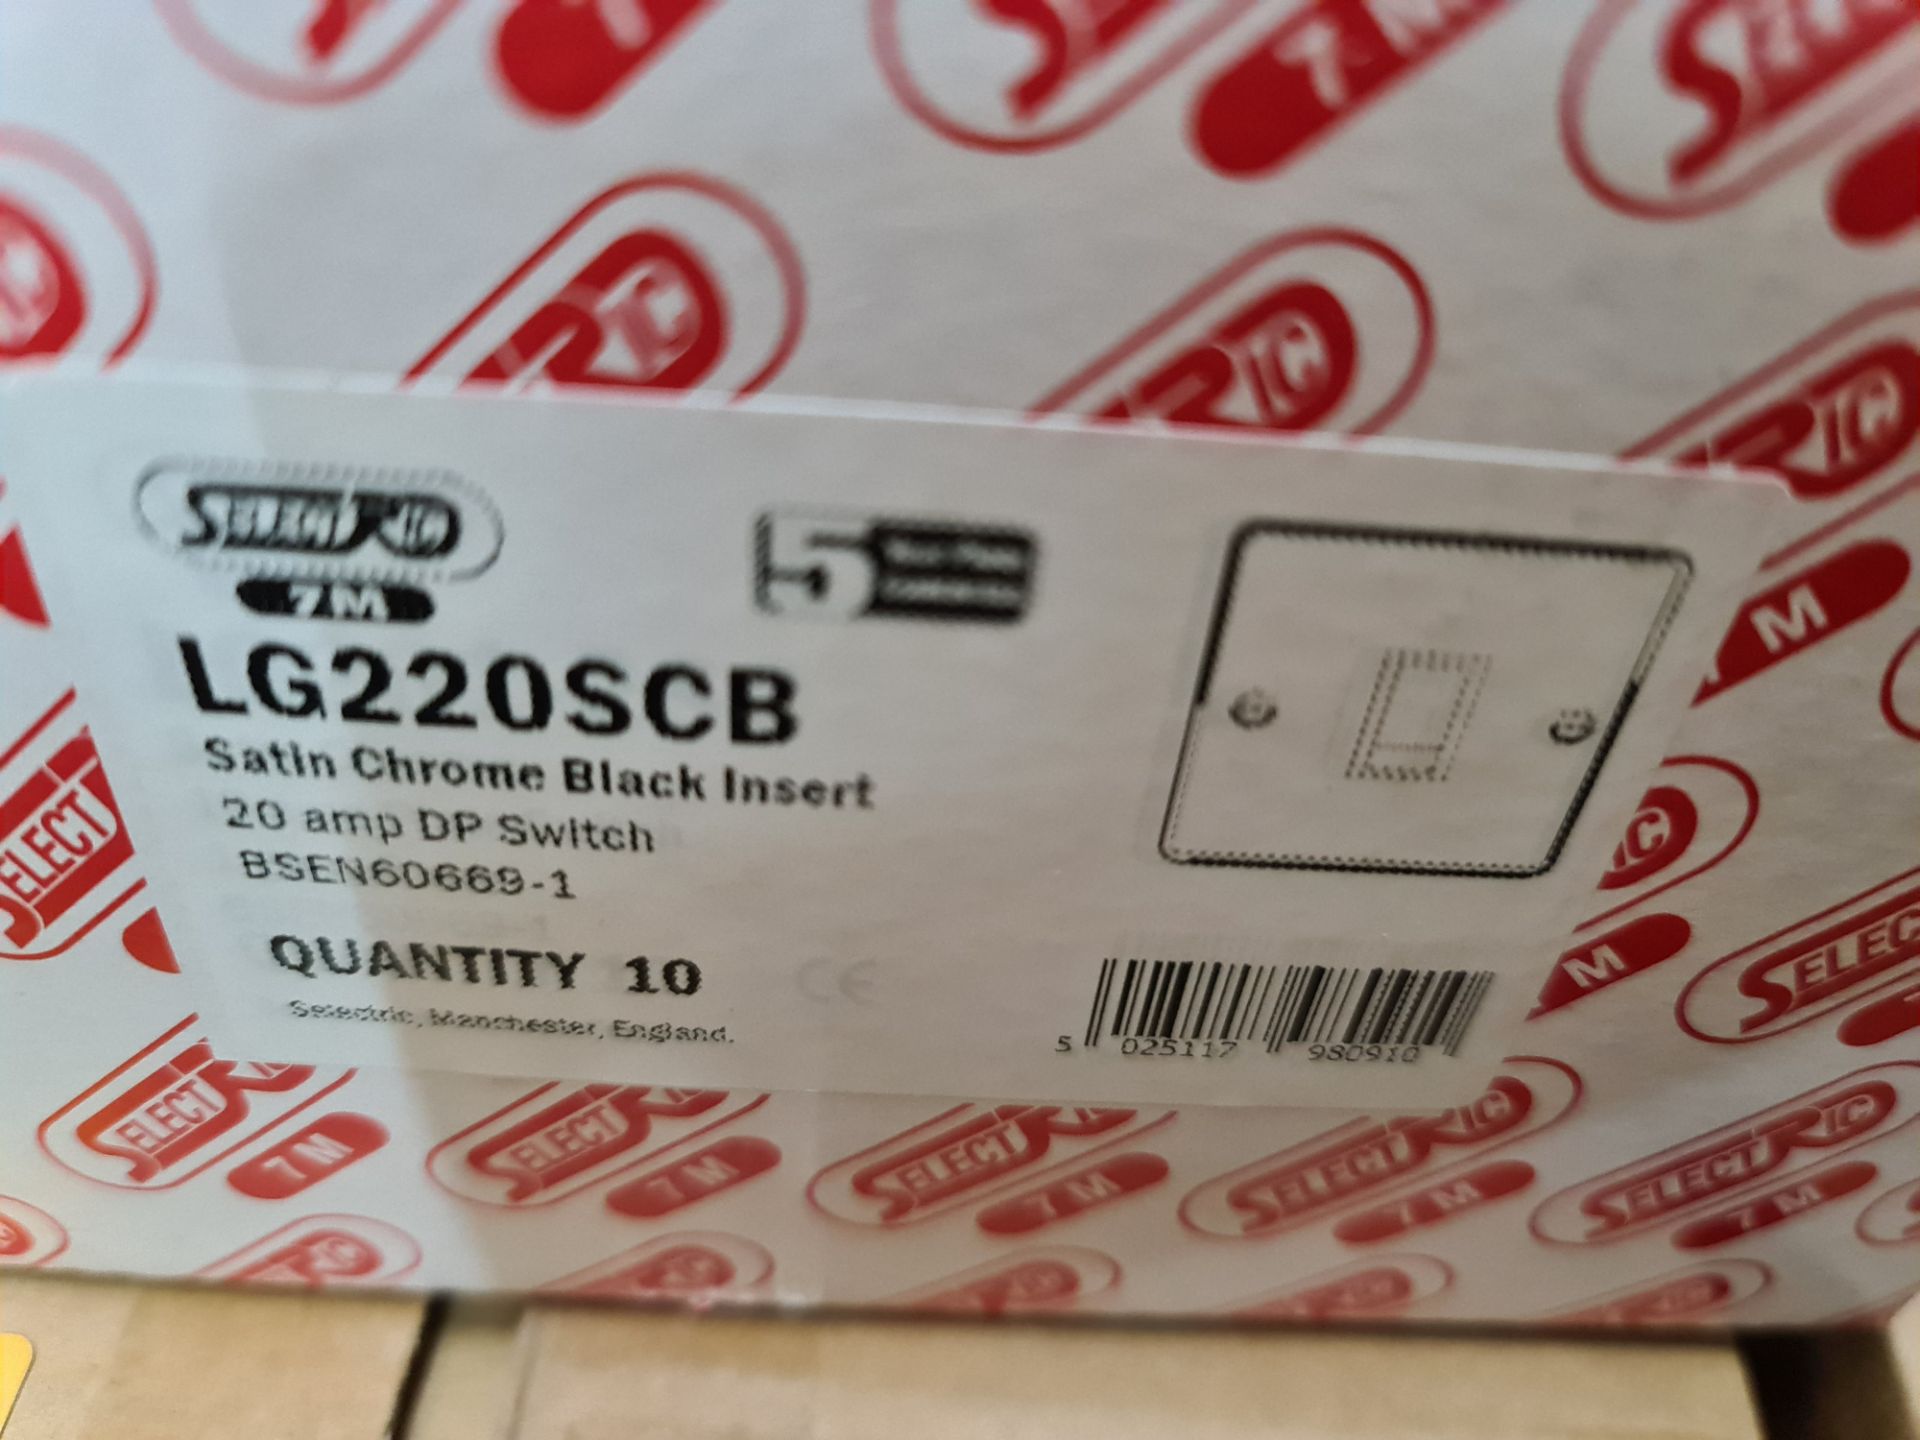 50 off (1 carton) Selectric 7M model LG220SCB satin chrome 20amp DP switches - black insert